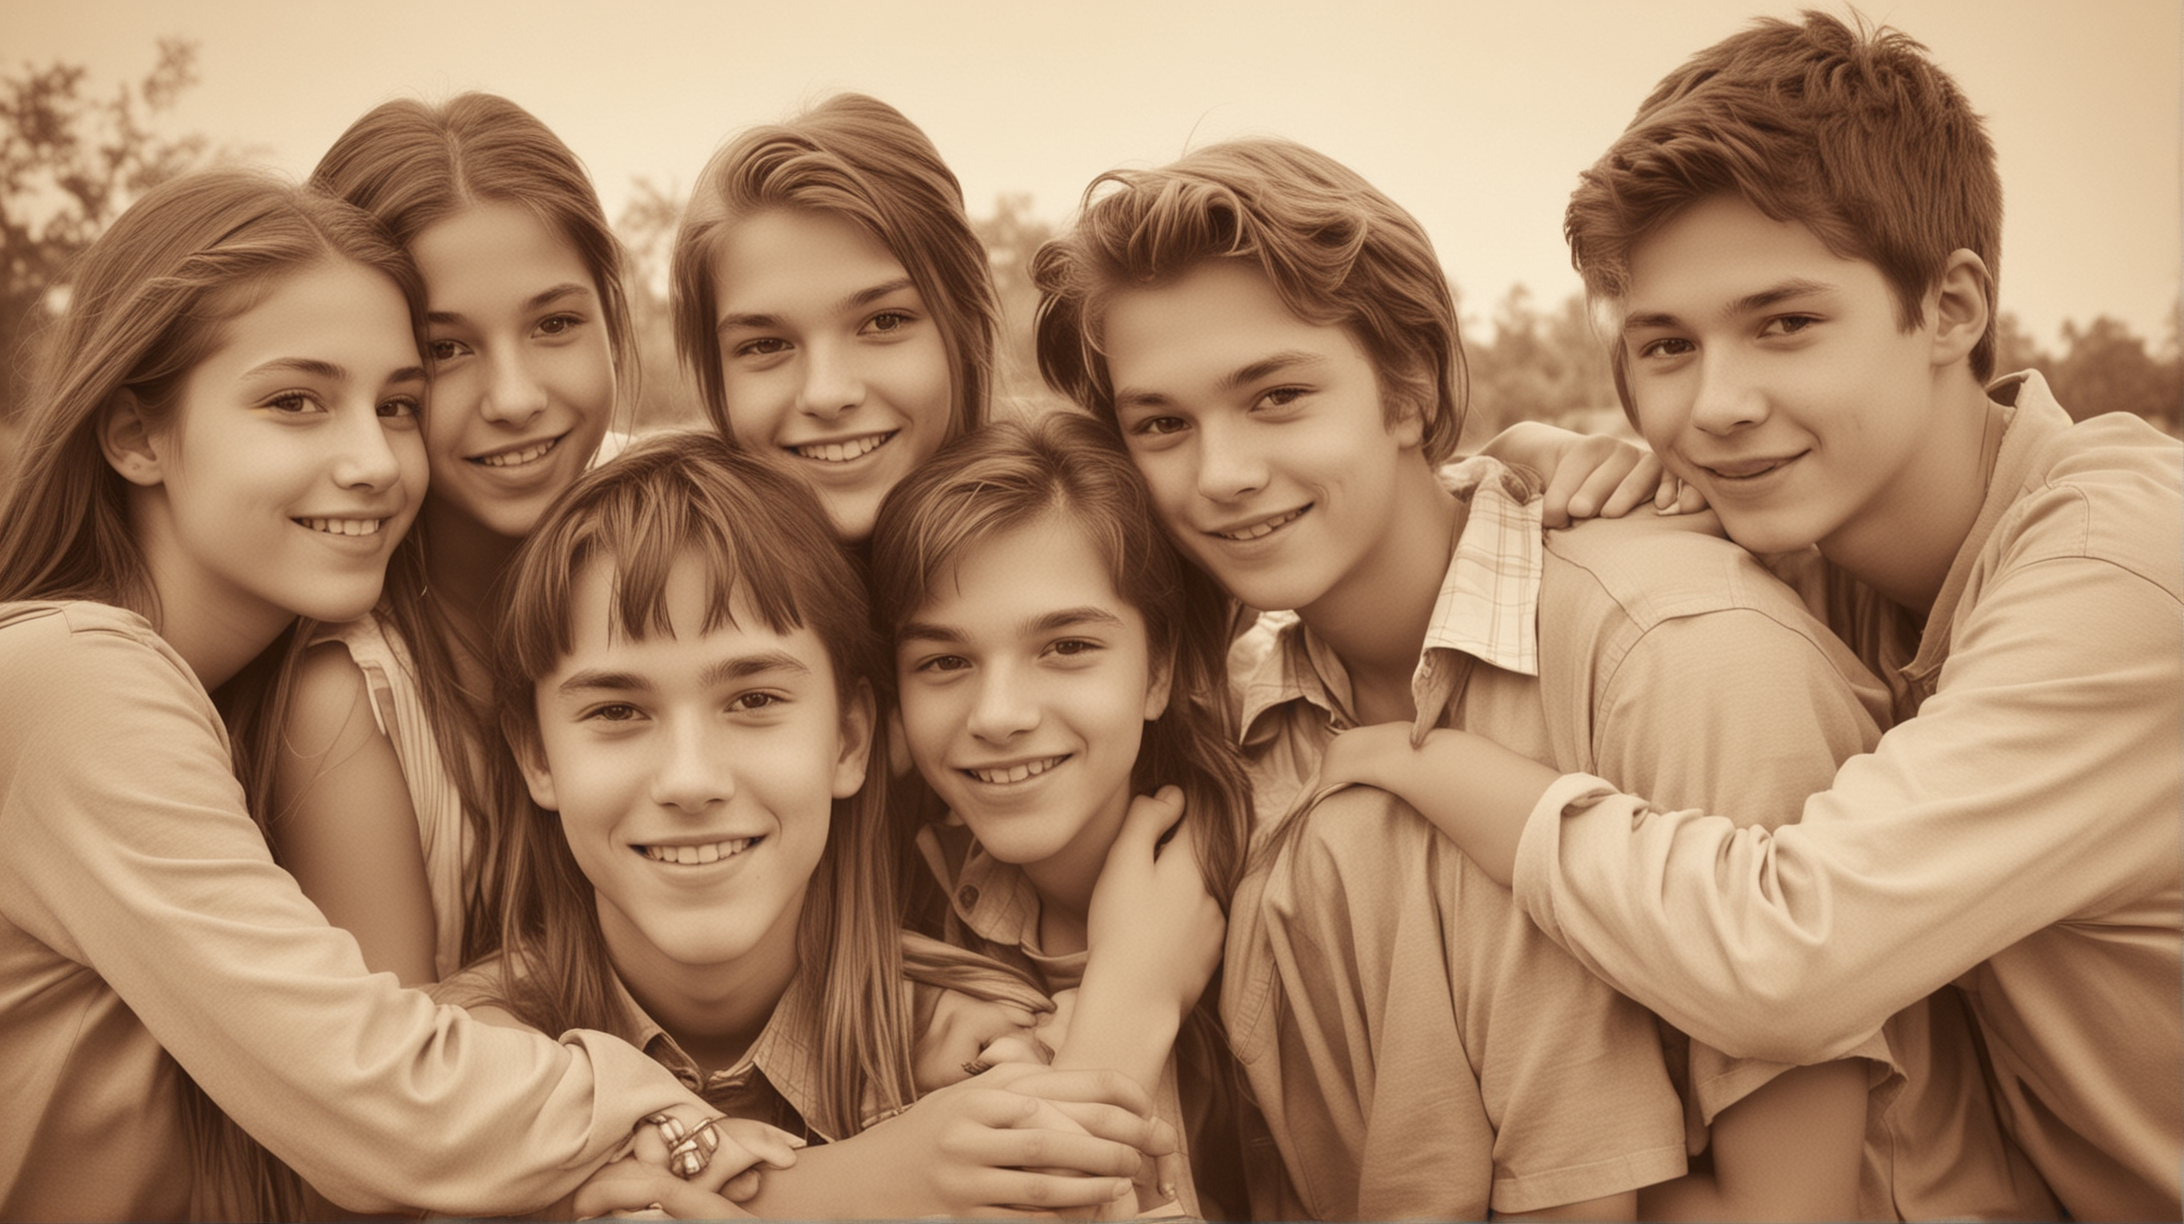 Teenage Love Group of Three Teen Boys and Four Teen Girls in Sepia Tone